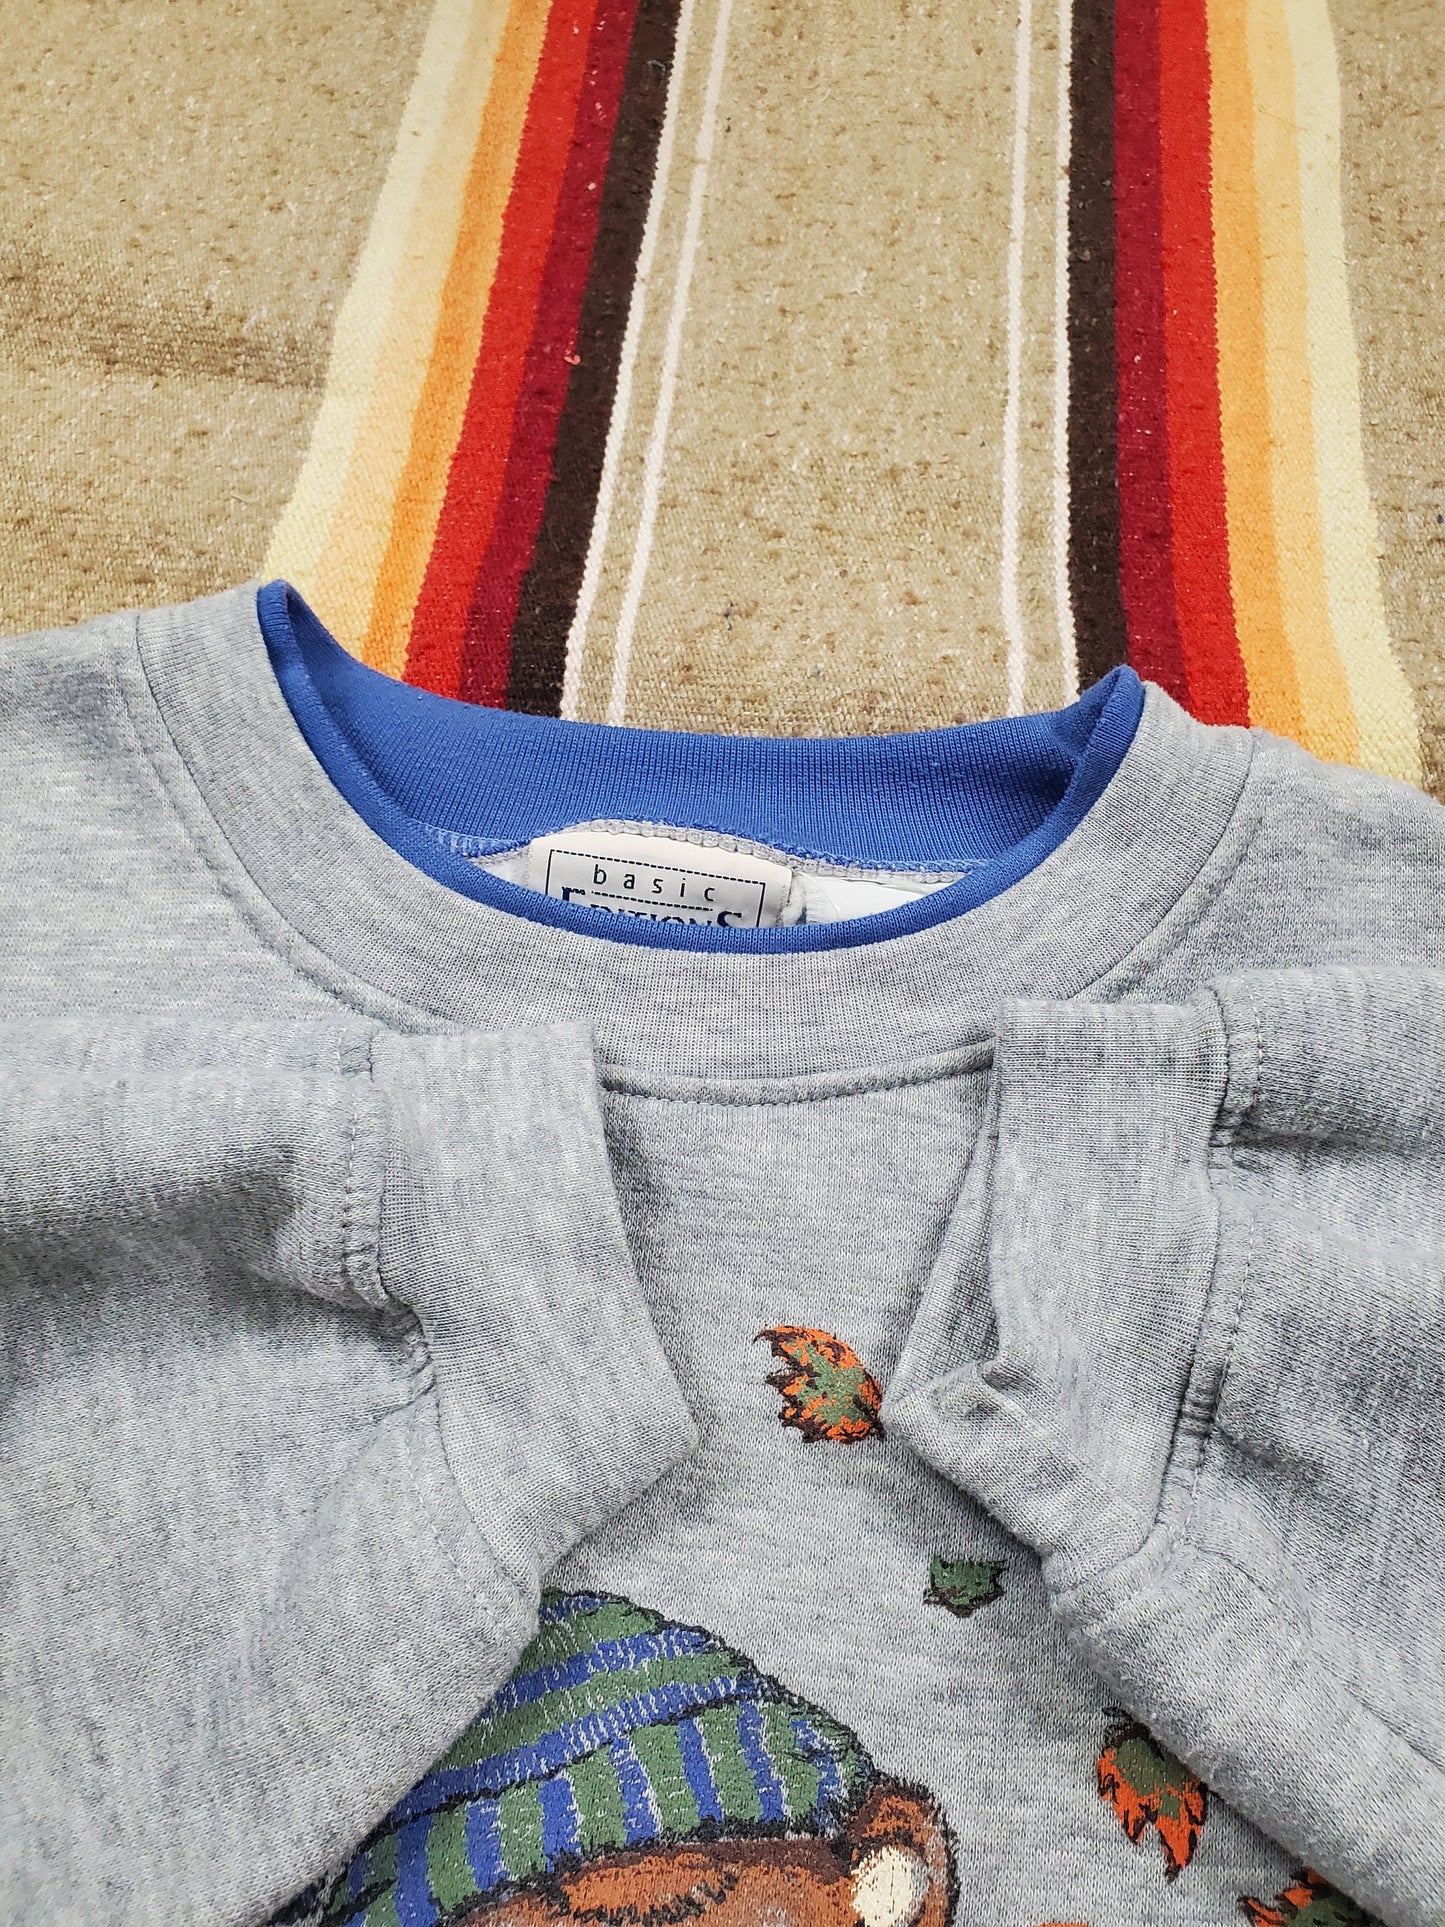 1990s/2000s Basic Editions Cute Autumn Fall Leaves Teddy Bear Sweatshirt Size M